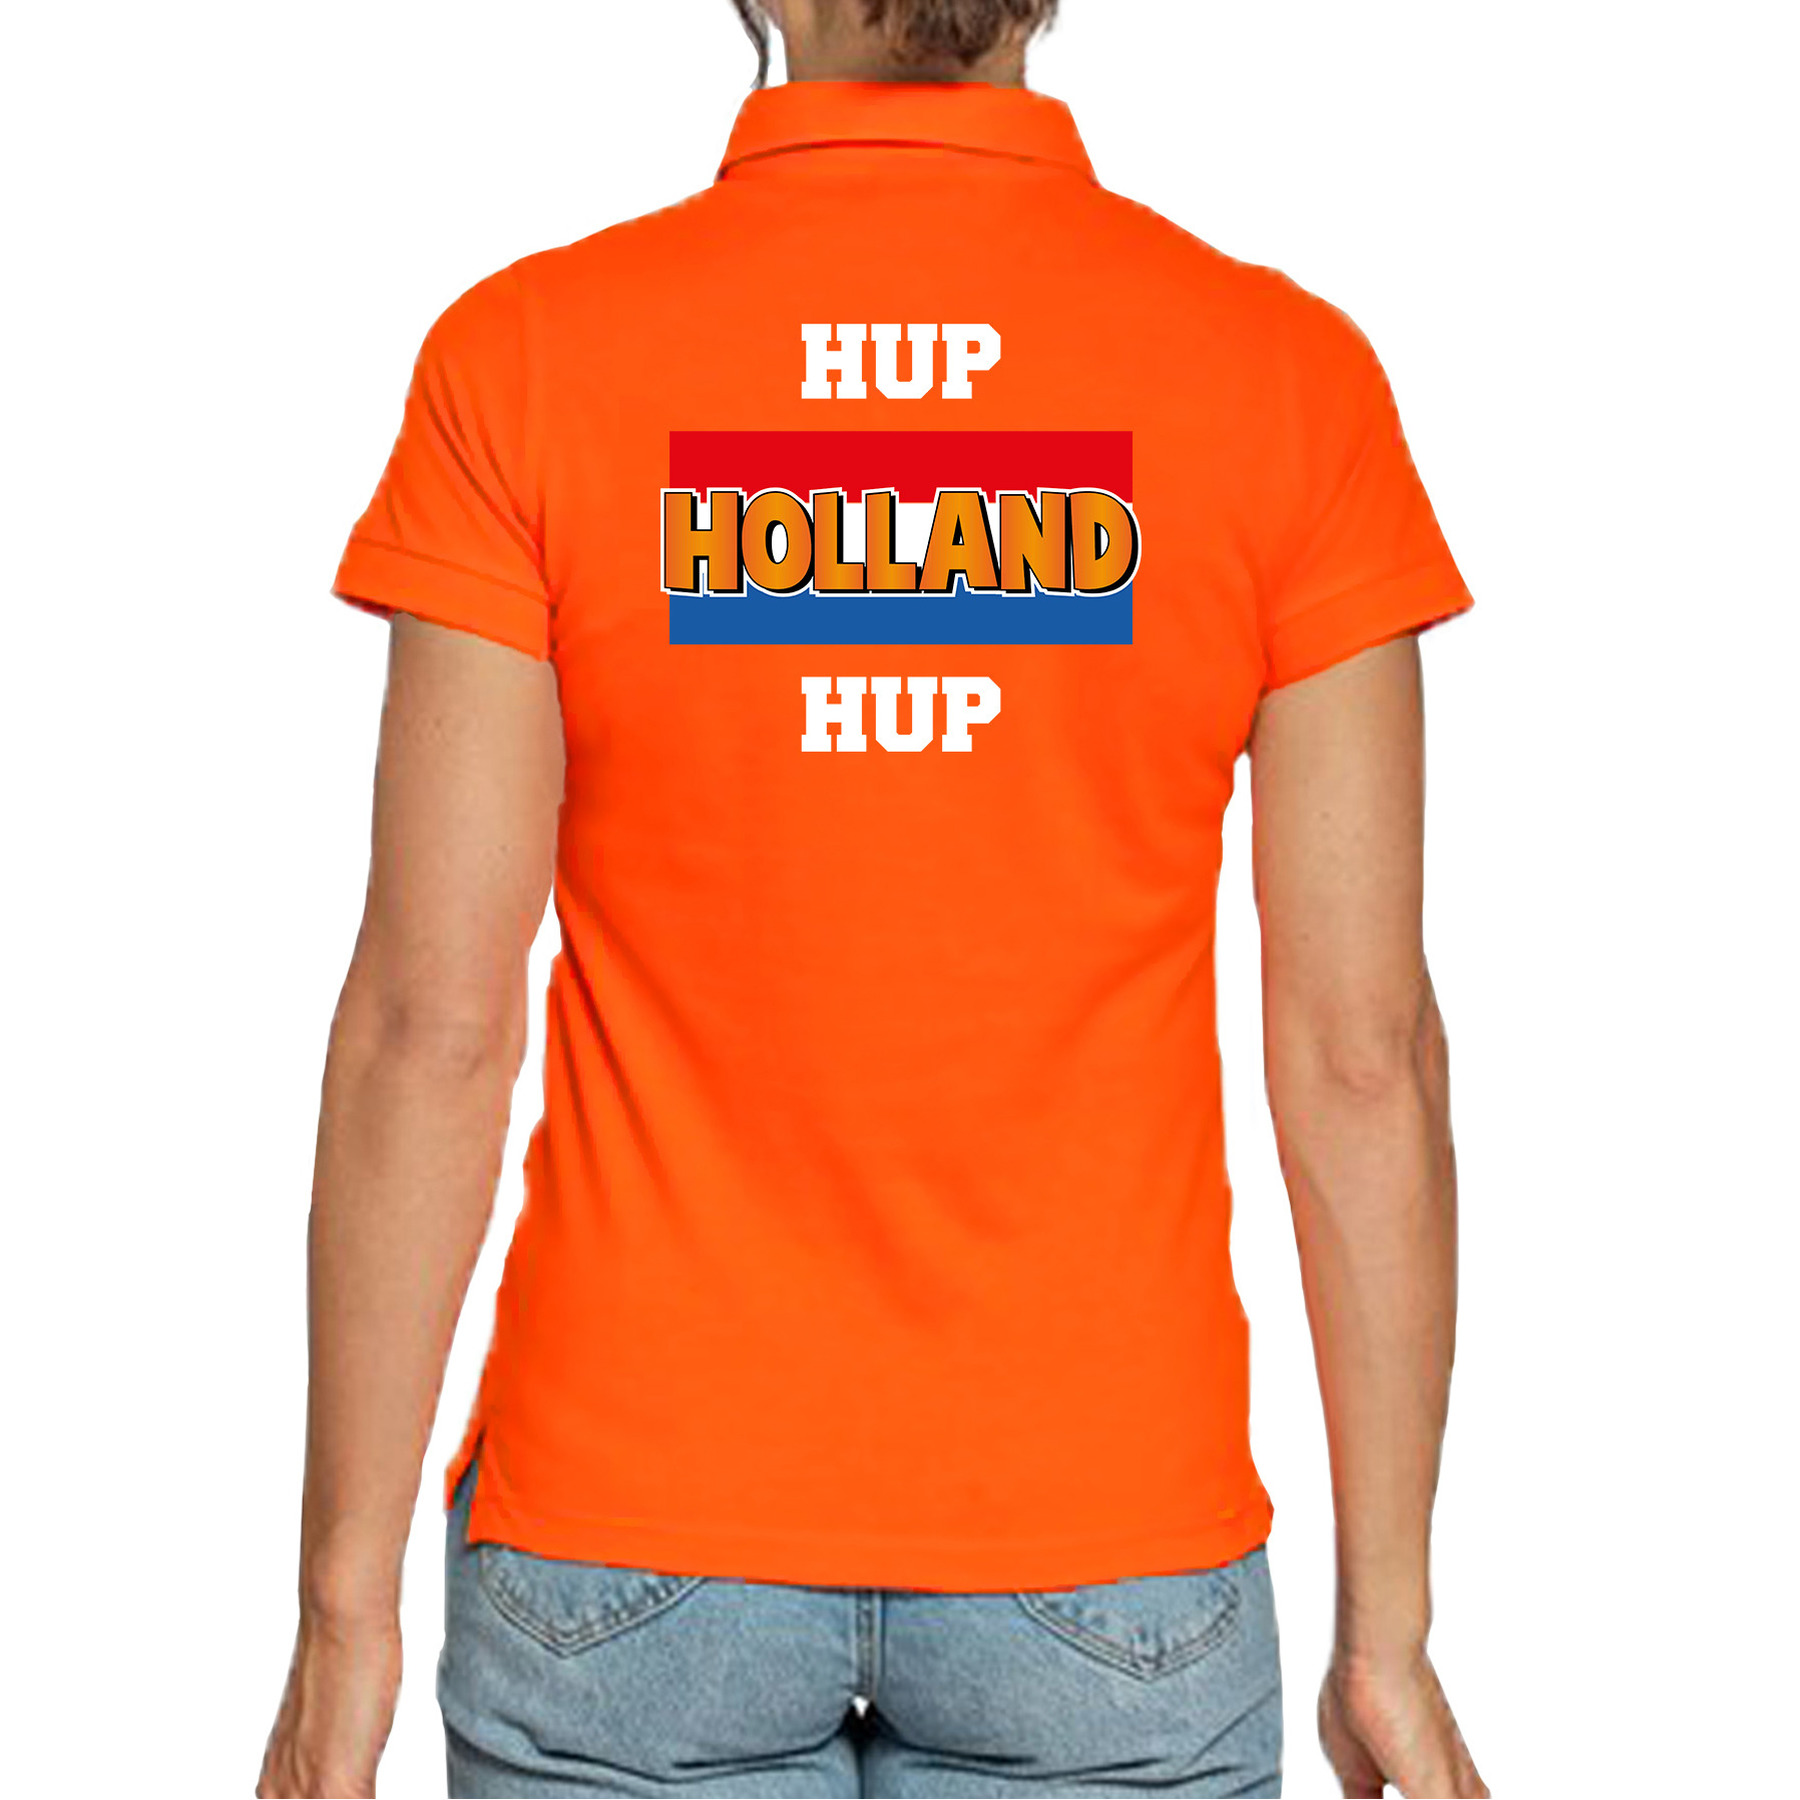 Hup Holland hup oranje poloshirt Holland - Nederland supporter EK/ WK voor dames